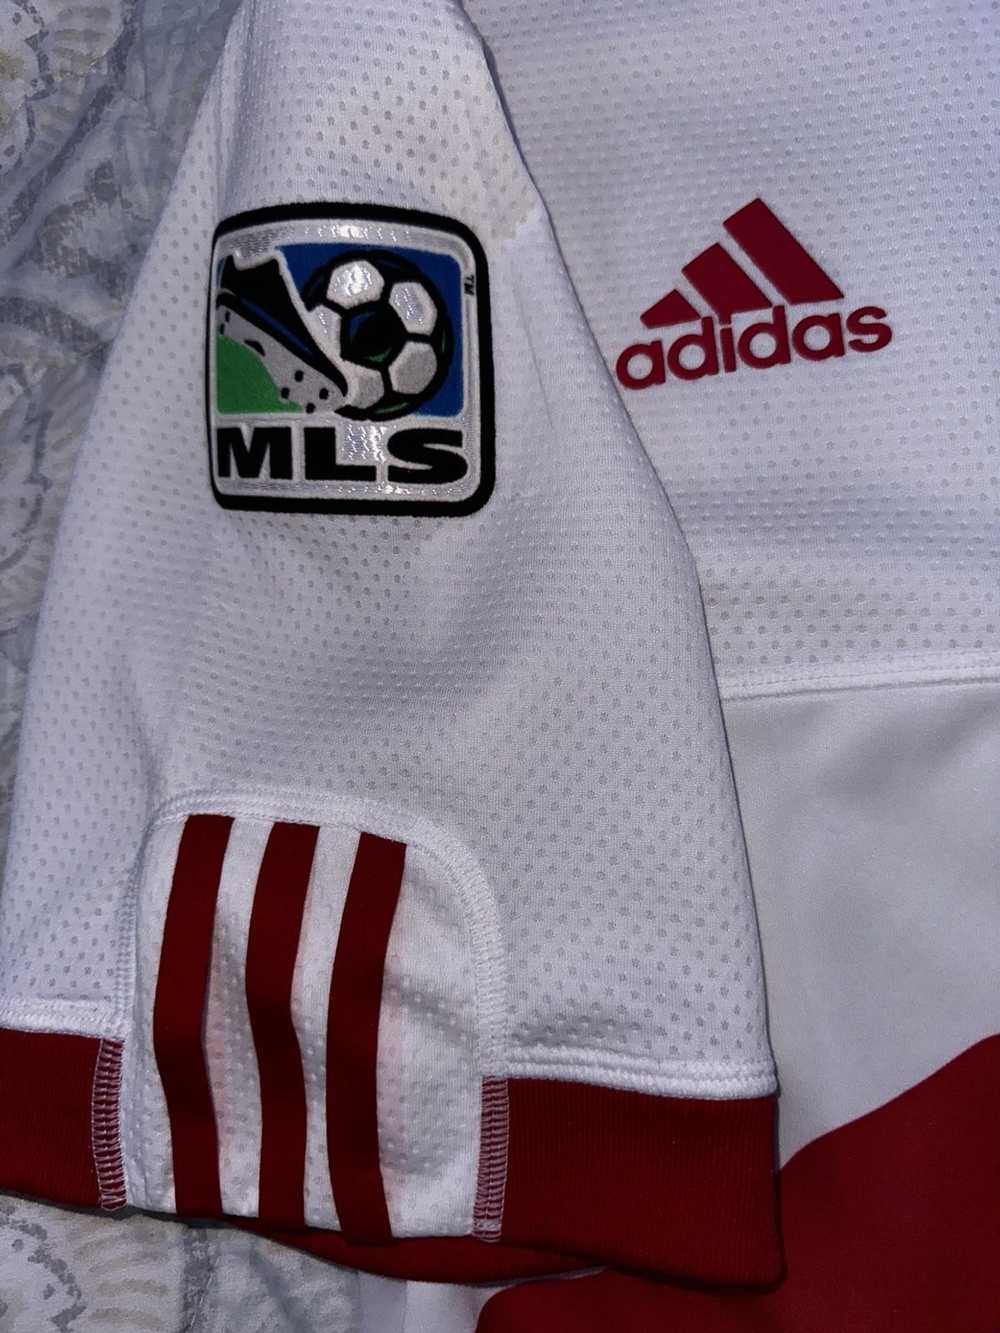 Adidas NY RedBulls Jersey 2009 MLS Player Issue - image 7